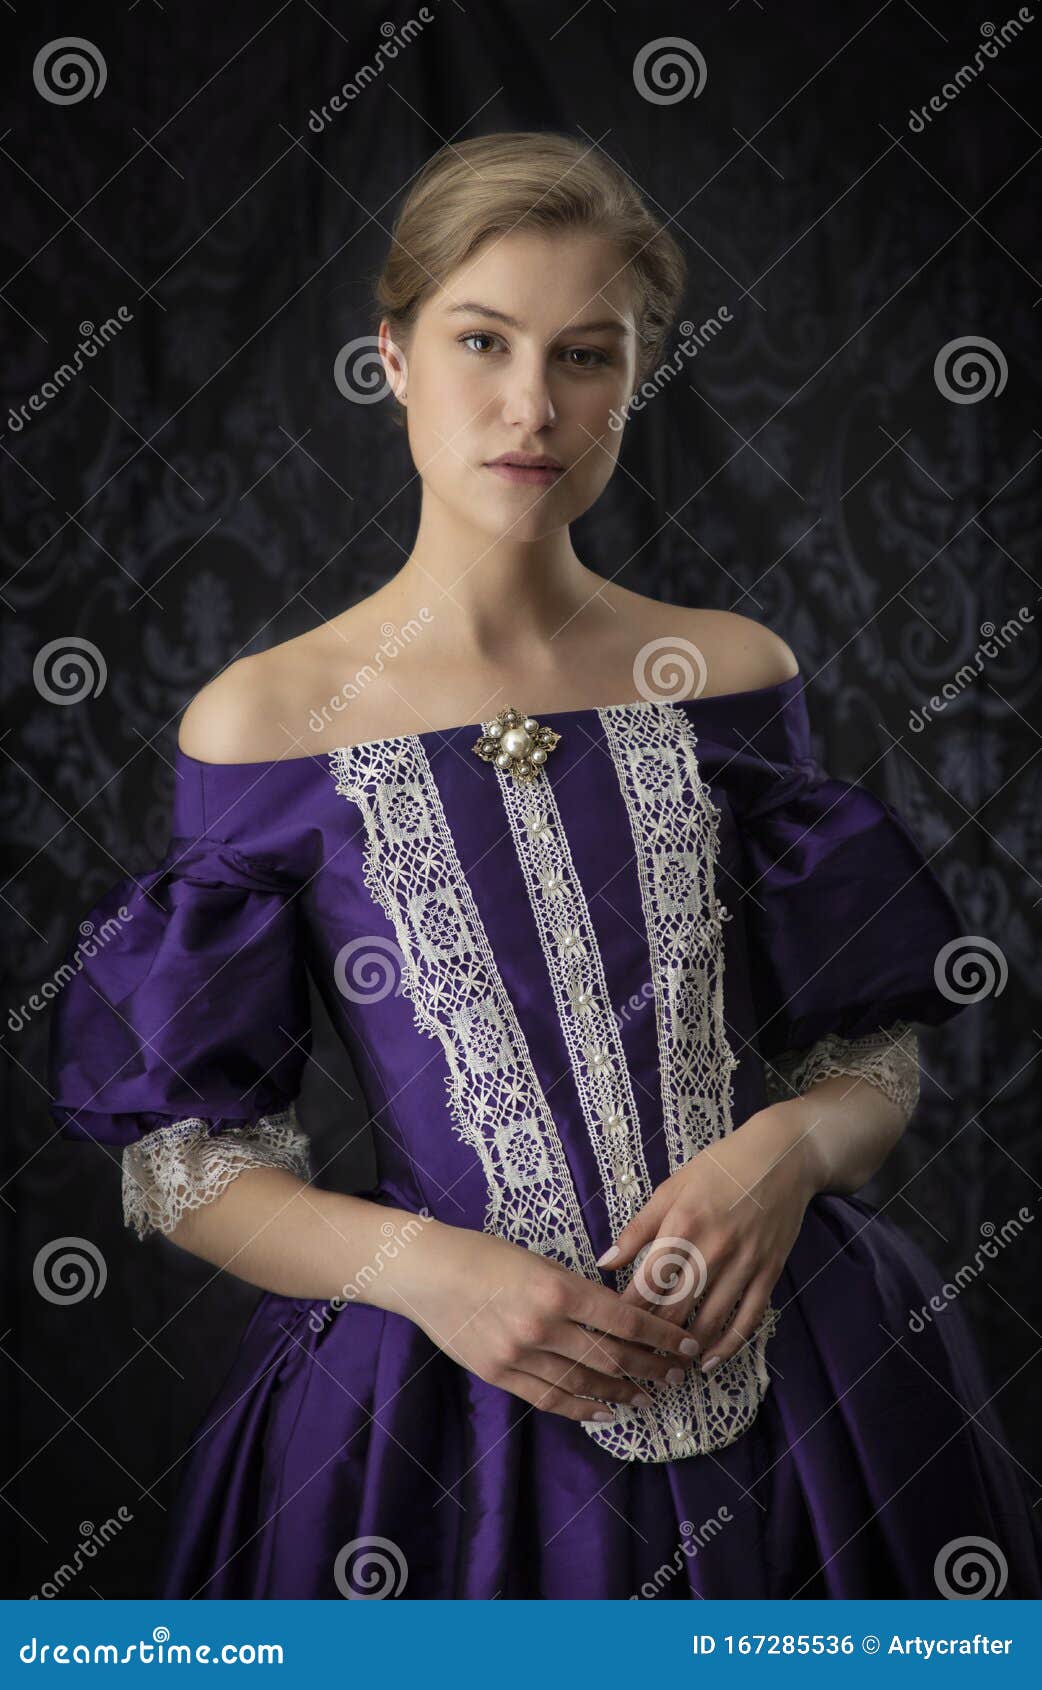 victorian, 18th century, or renaissance woman in a silk dress